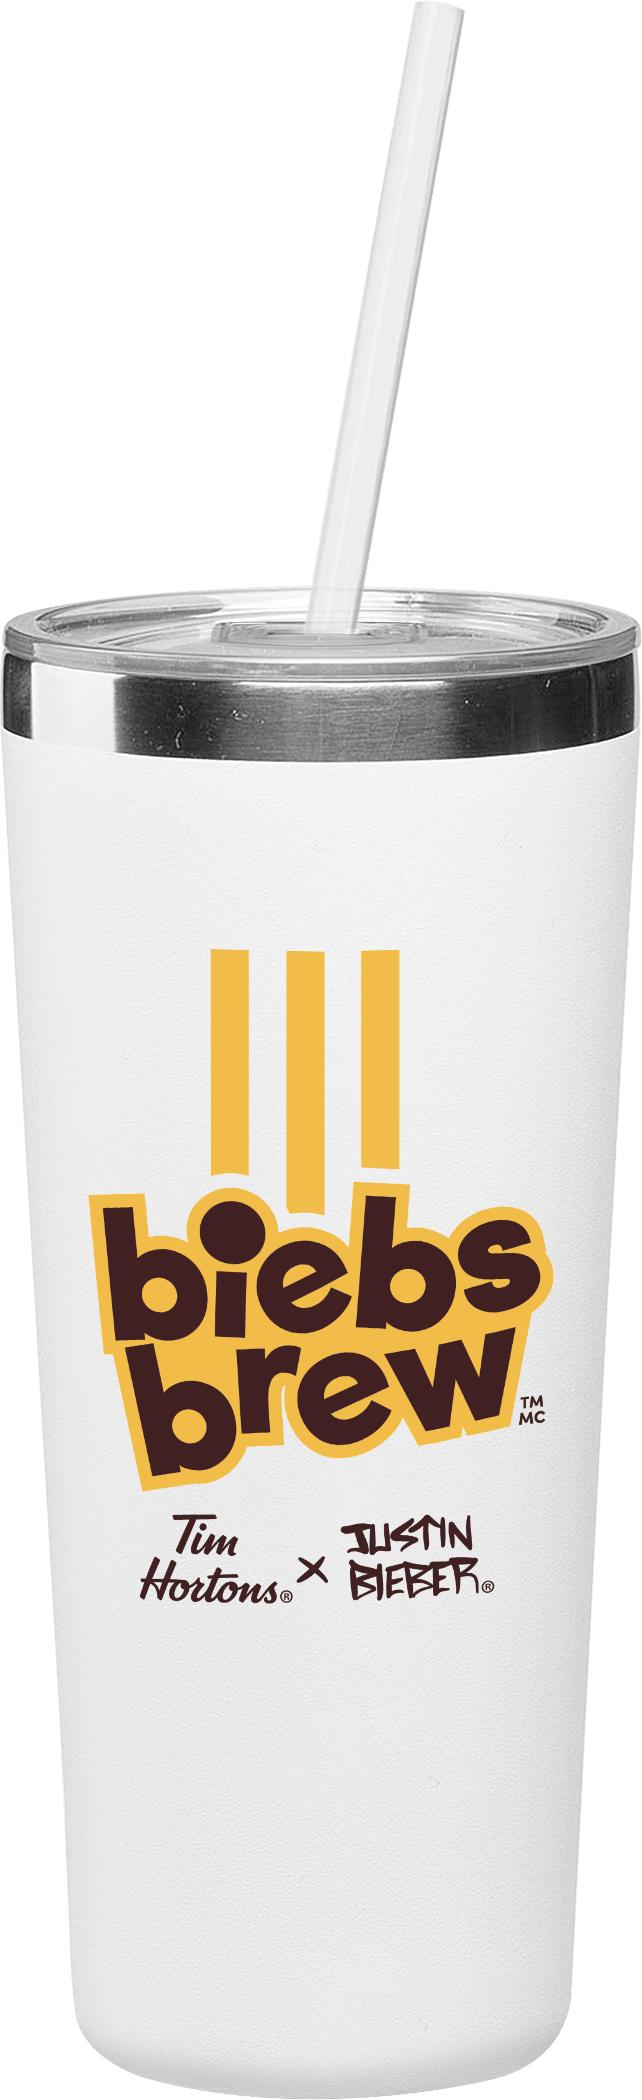 Tim Hortons x Justin Bieber Biebs Brew Tumbler Mug Limited Edition